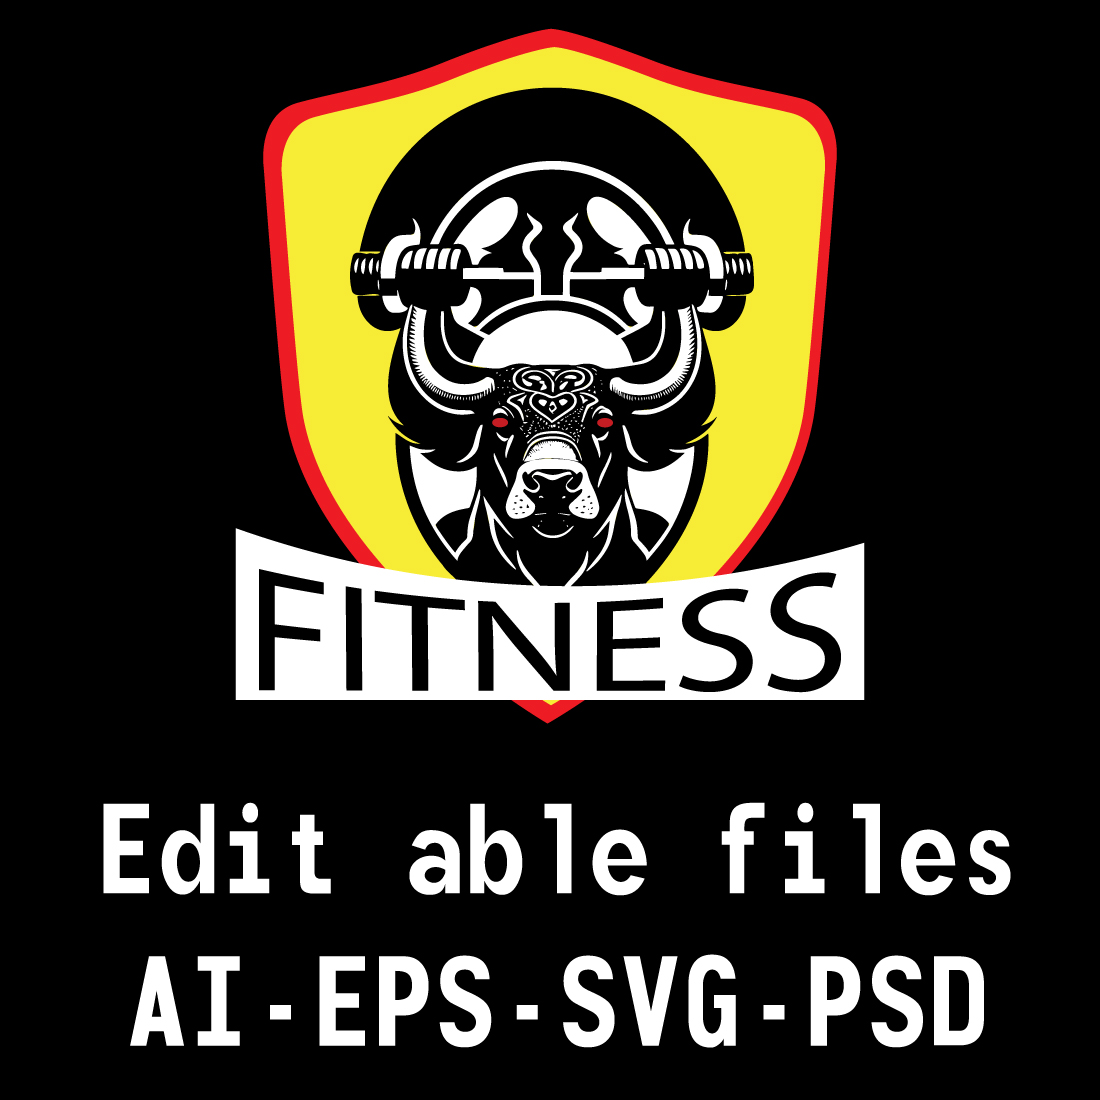 Bull fitness logo preview image.